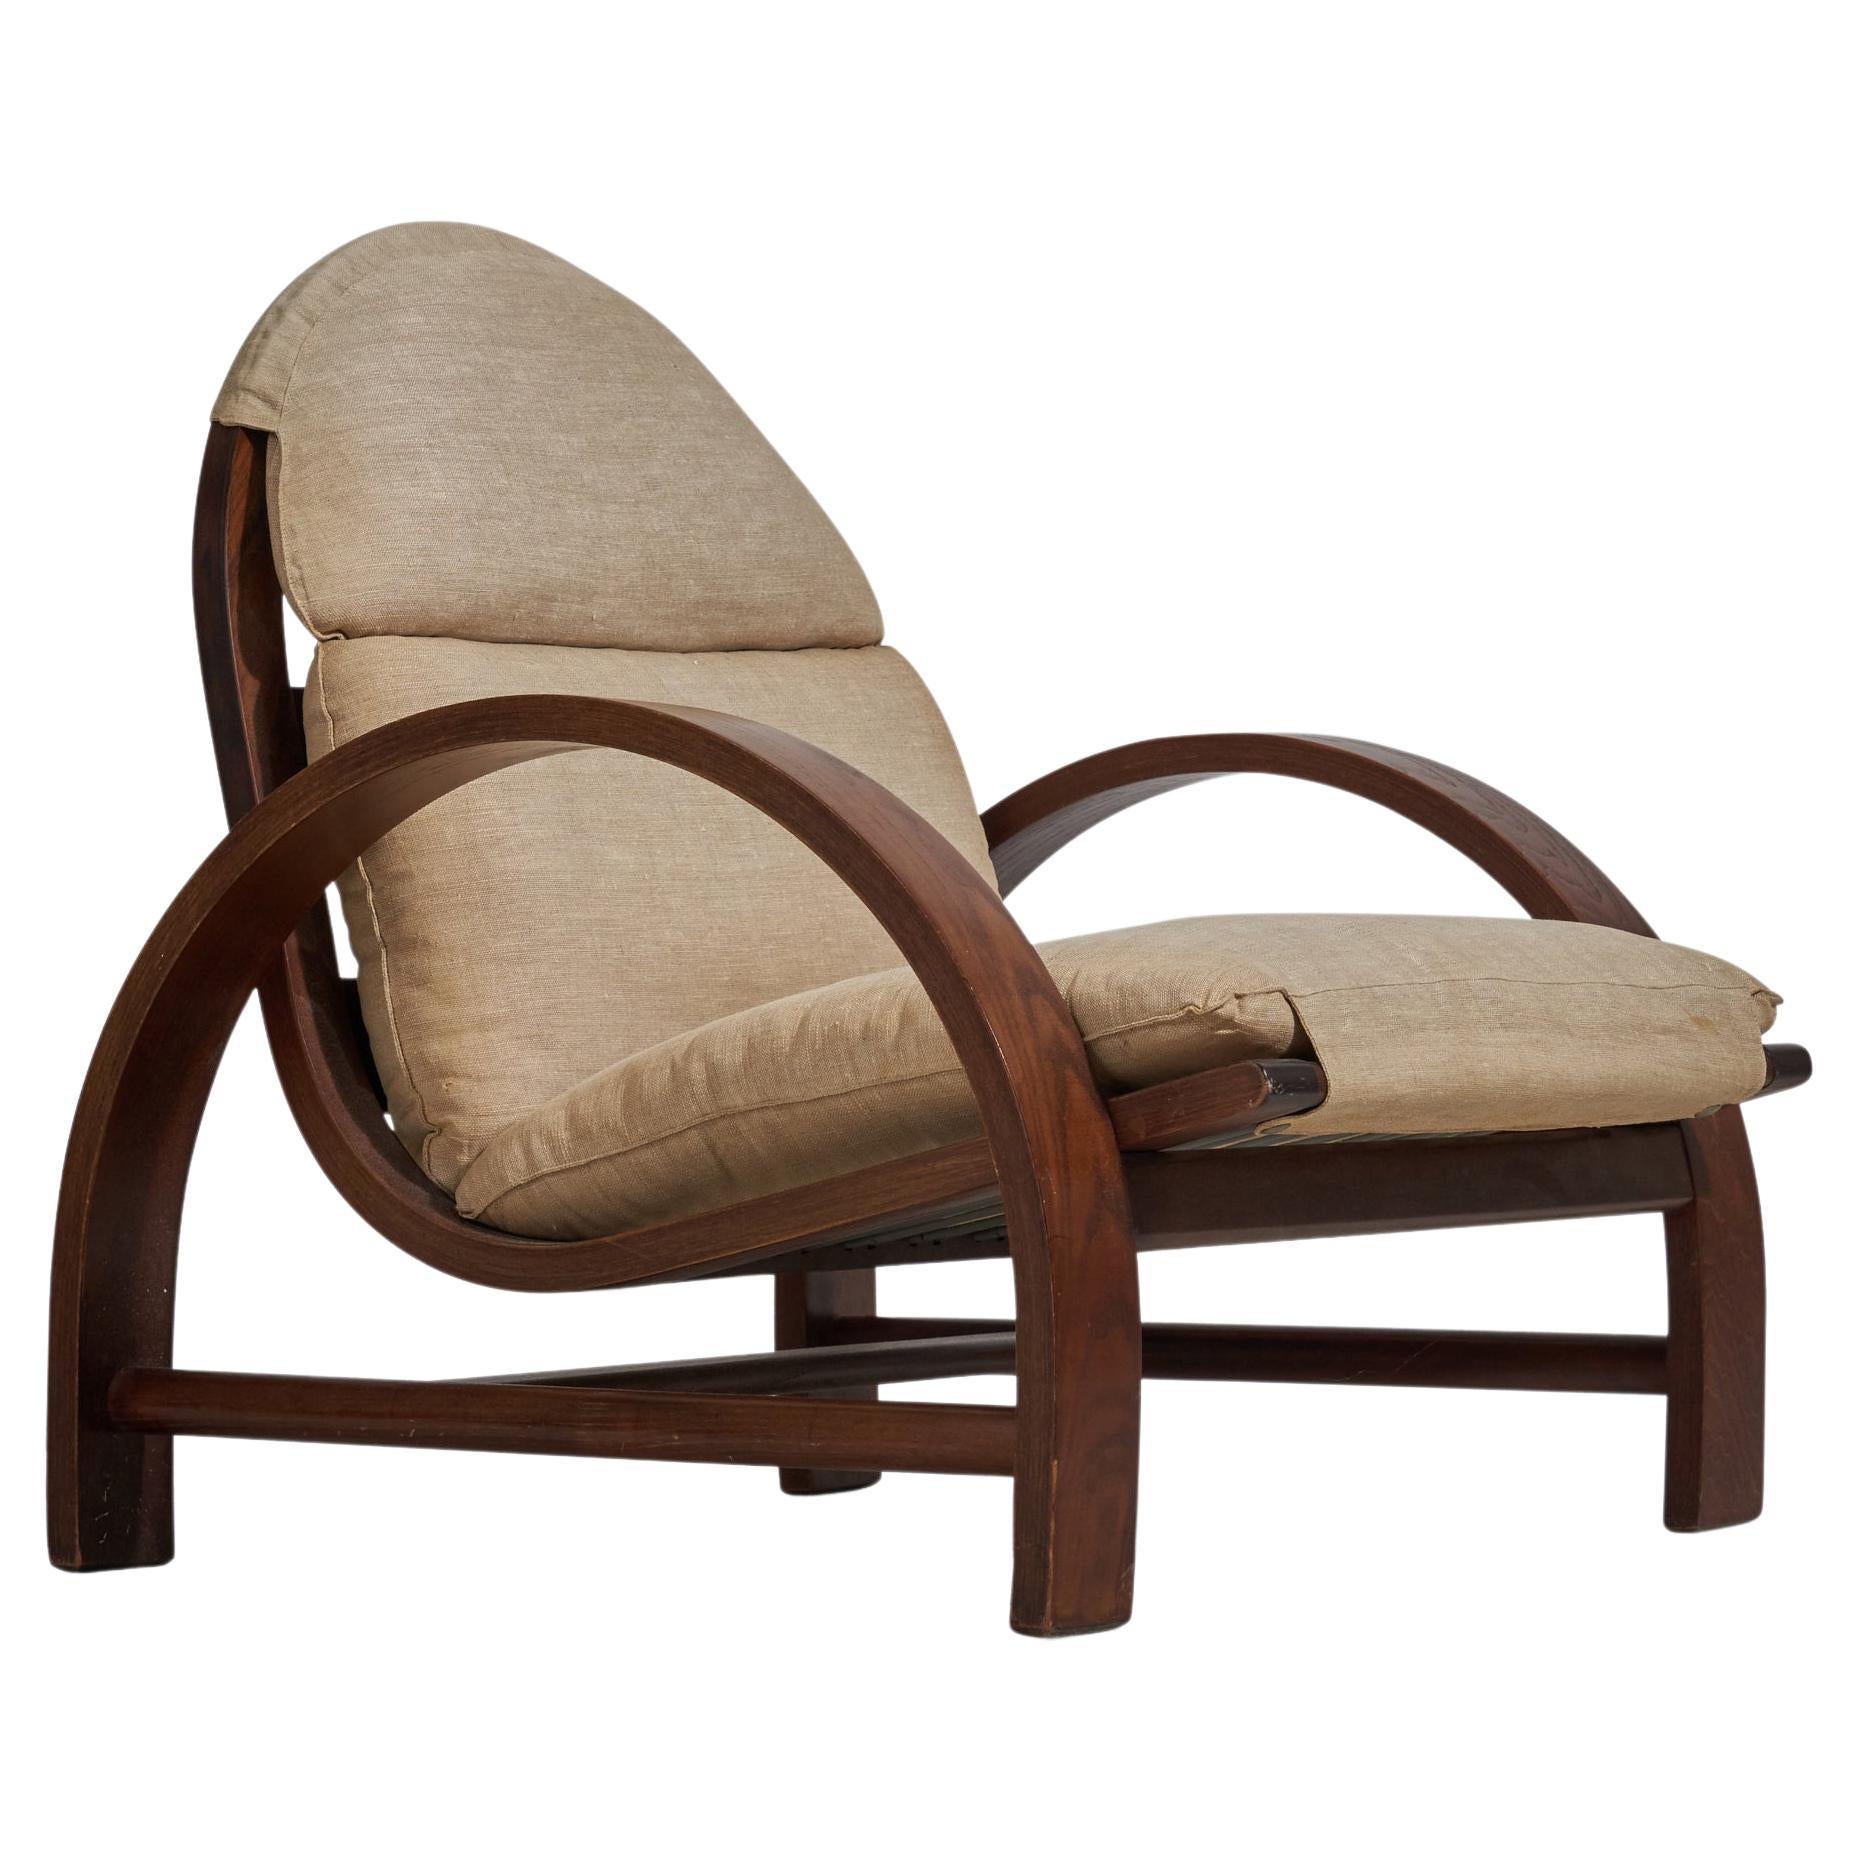 Adalberto Dal Lago, Lounge Chair, Ed. Germa, Ash Wood, Fabric, Italy, 1974 For Sale